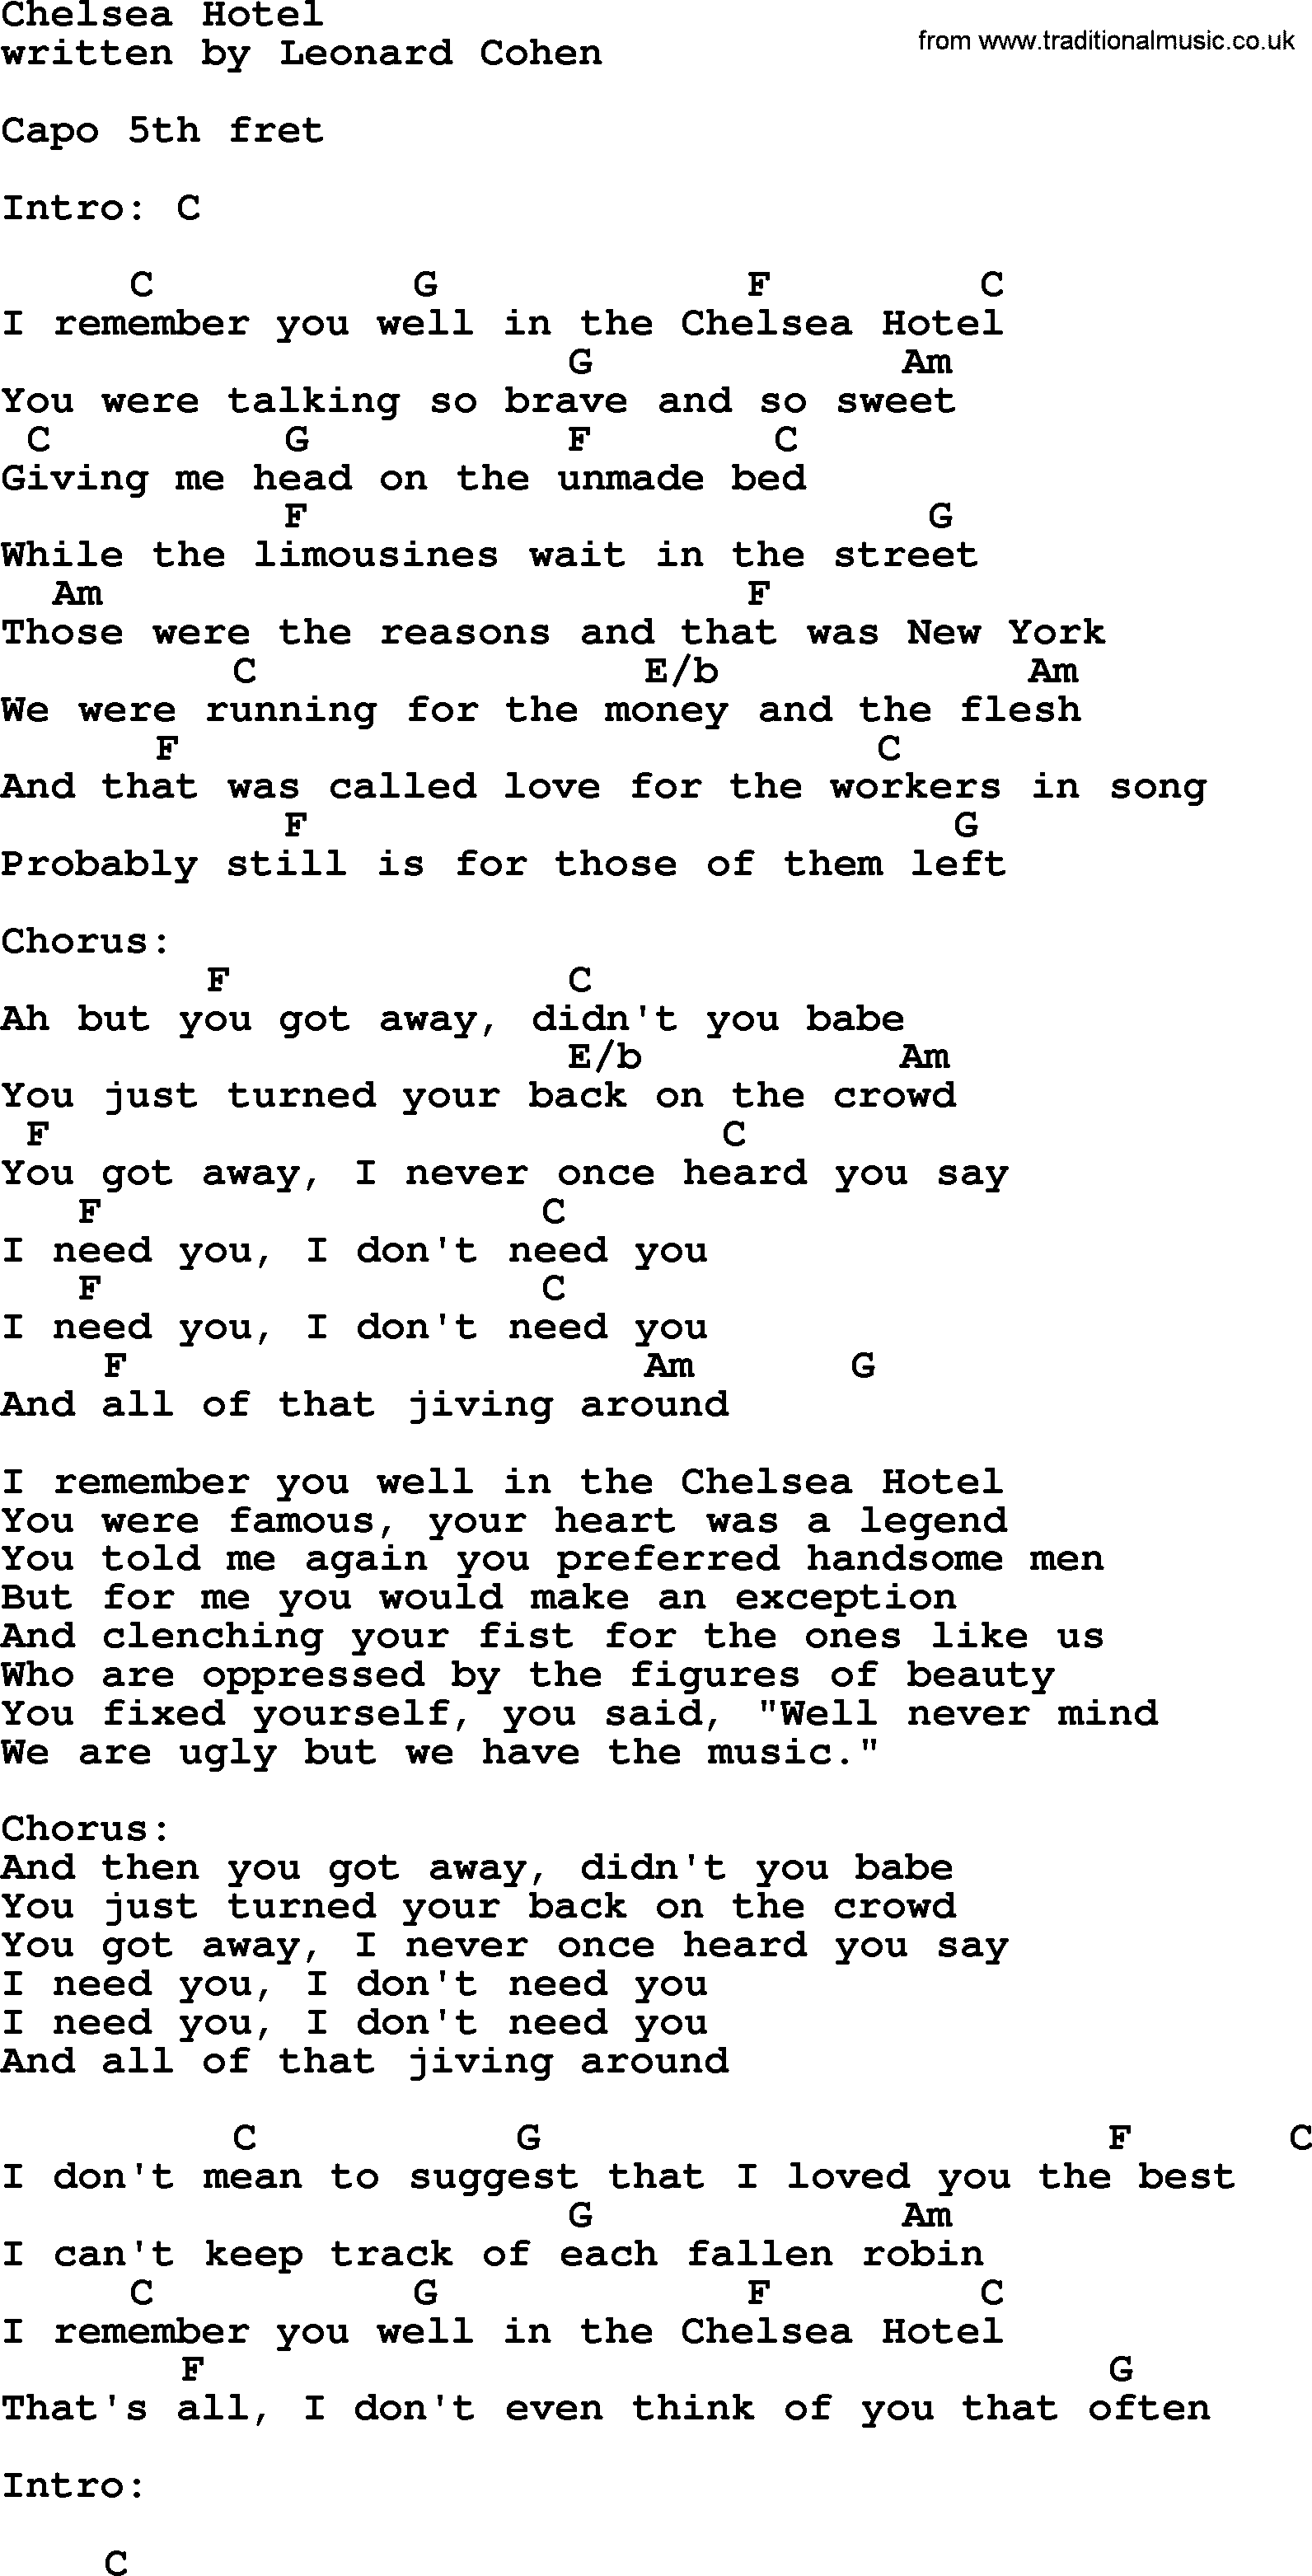 Leonard Cohen song Chelsea Hotel, lyrics and chords